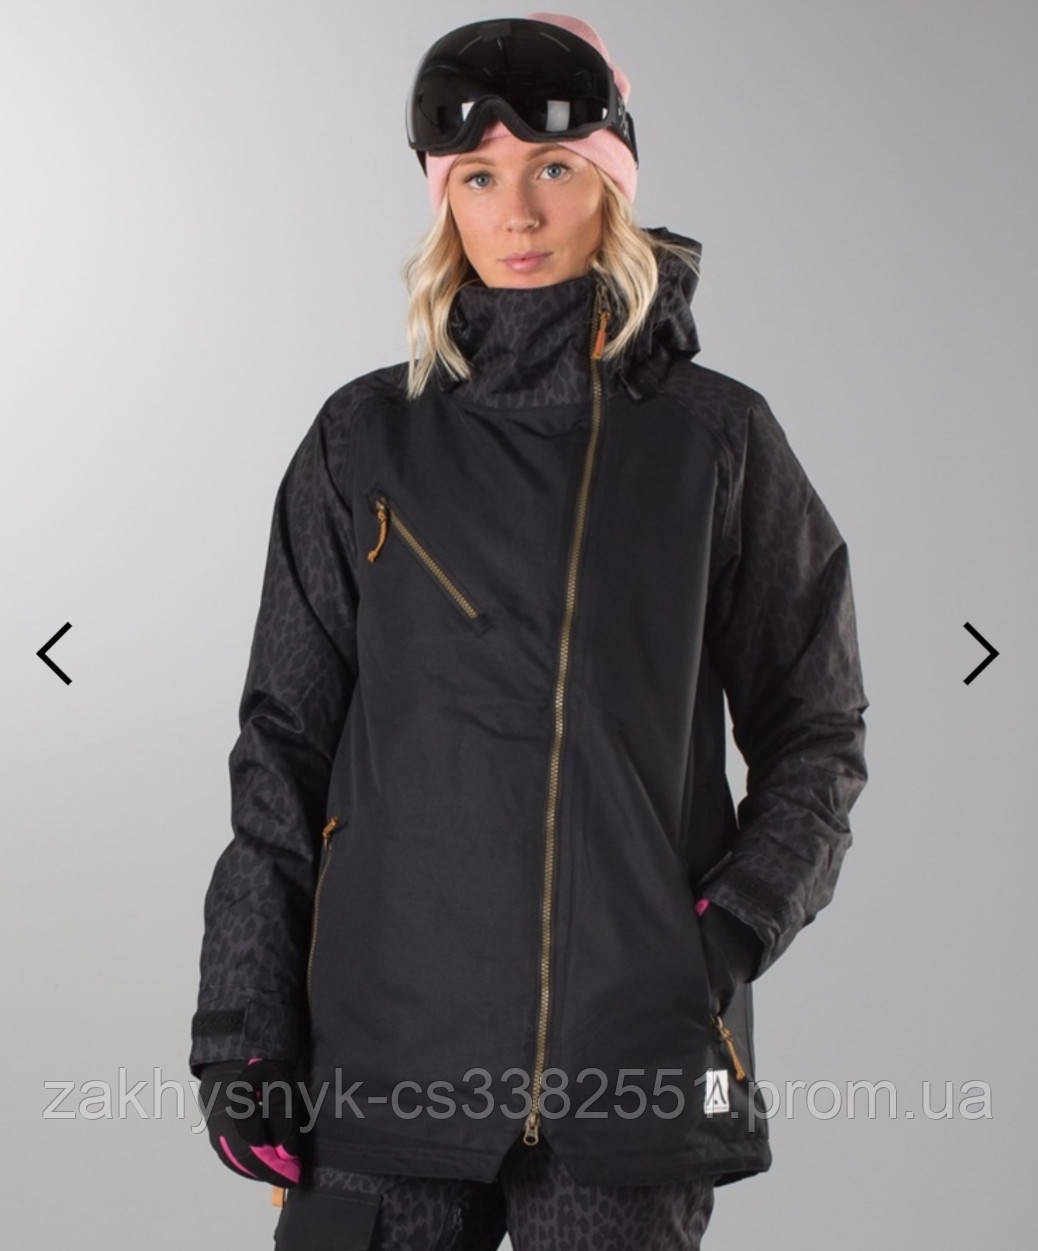 Жіноча лижна сноубордична гірськолижна куртка/ женская лыжная куртка